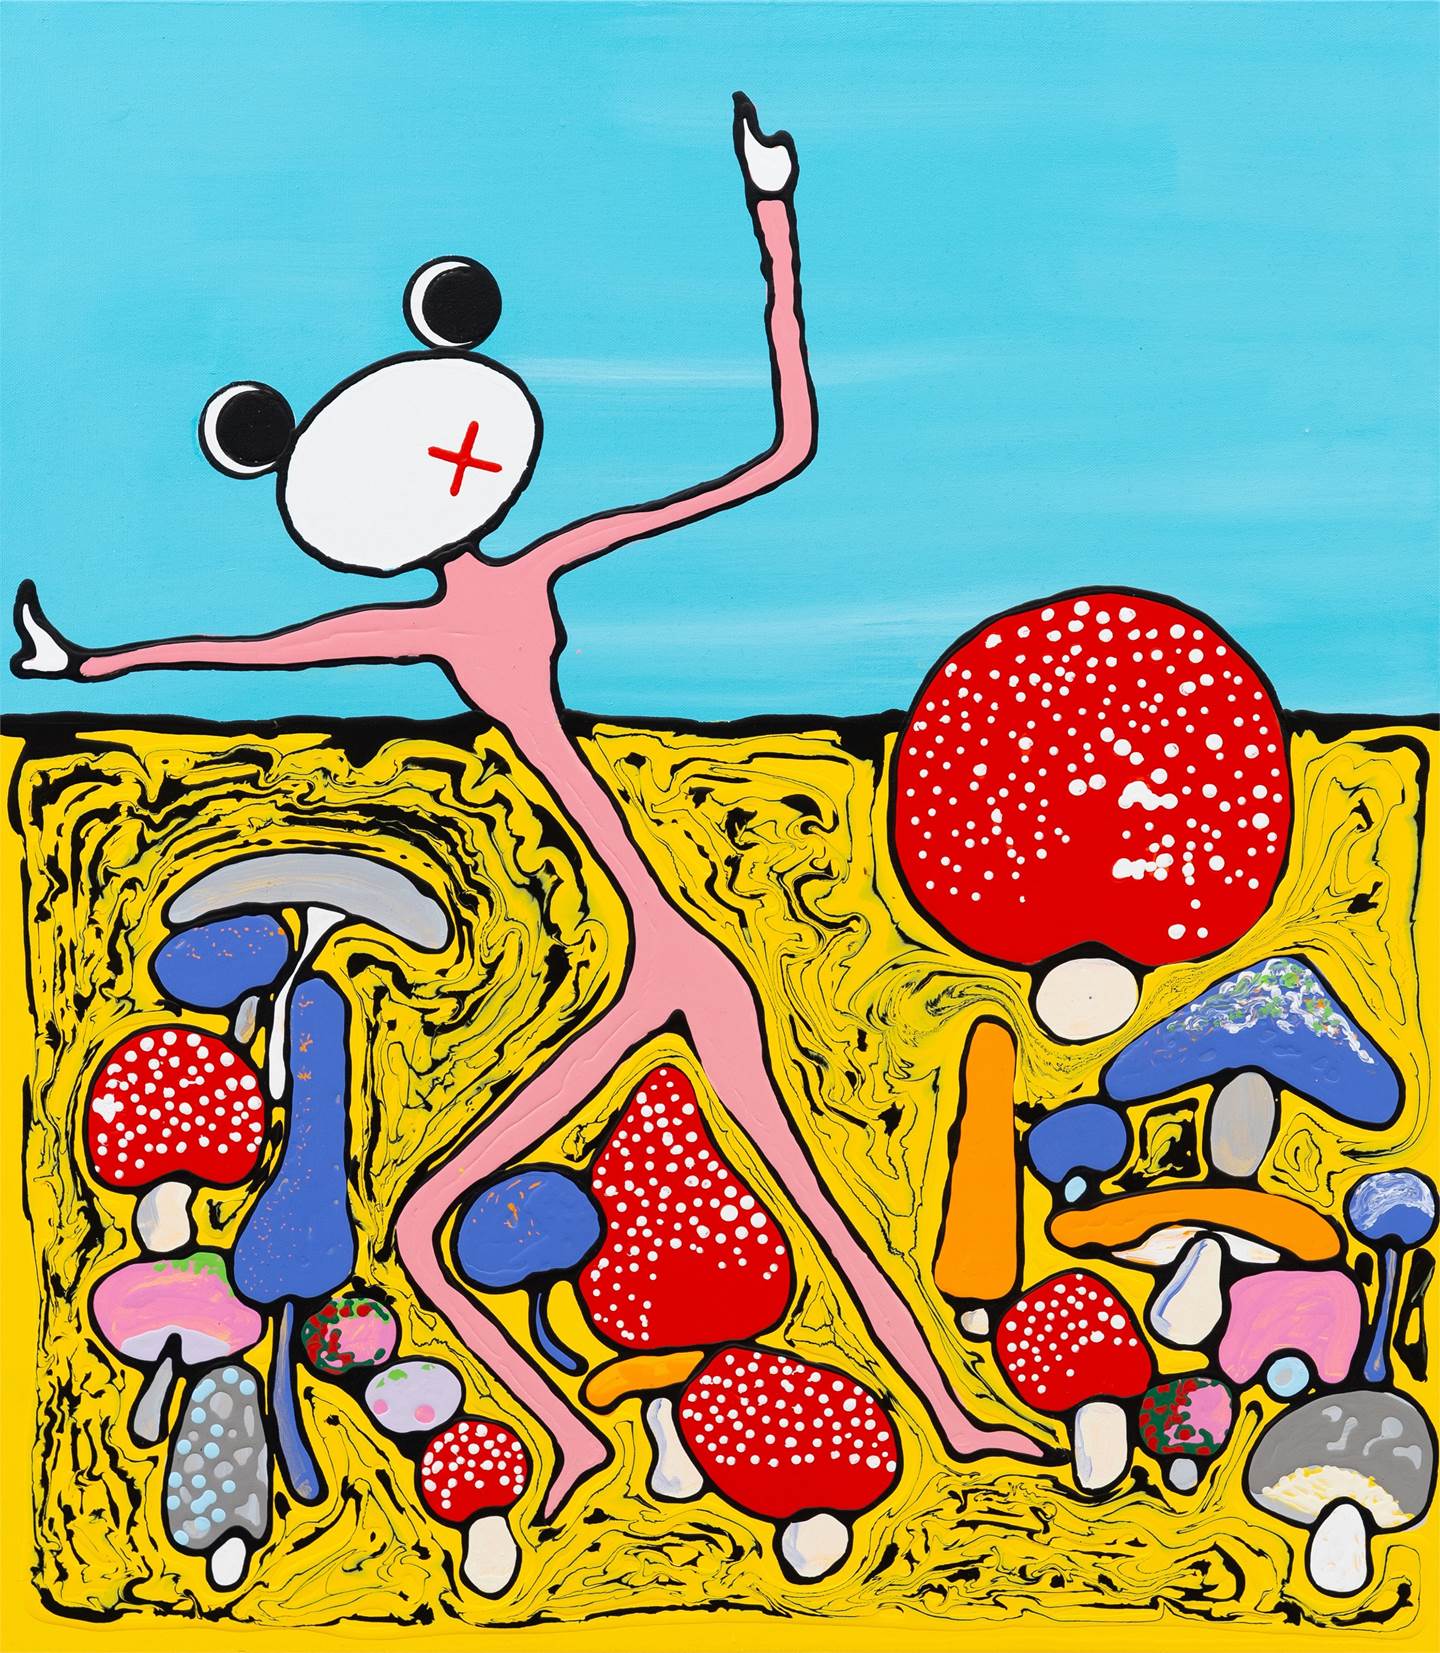 Dance with the mushrooms #1, original   Pintura de Mario Louro